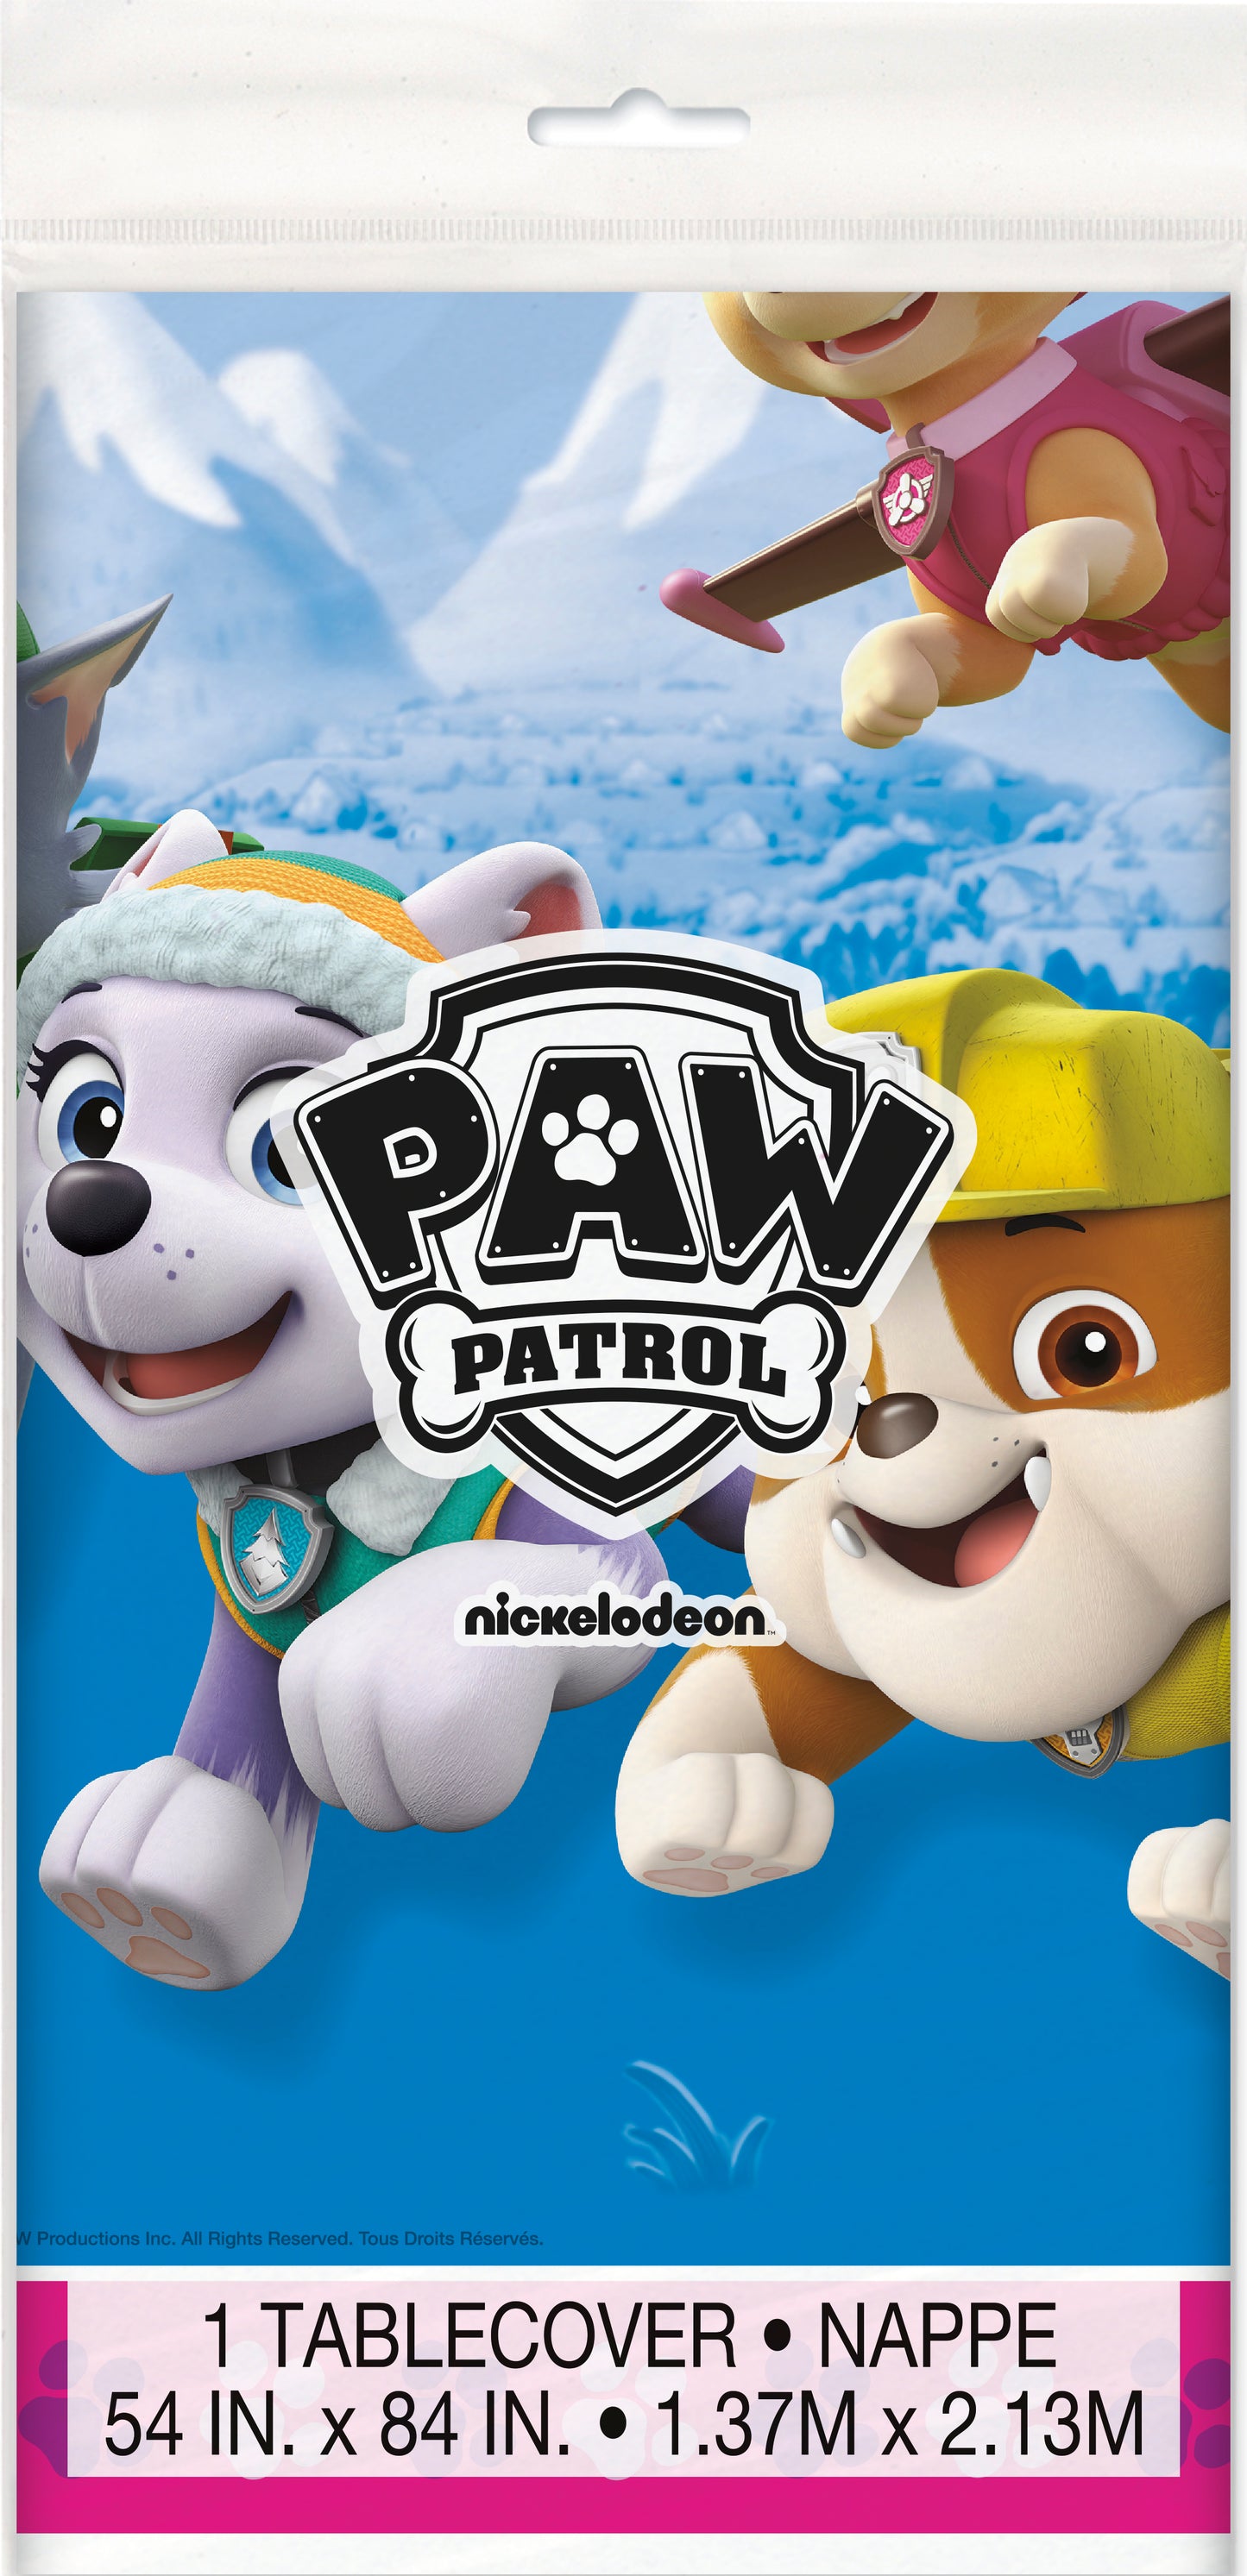 PAW Patrol Girls Party Supply Bundle